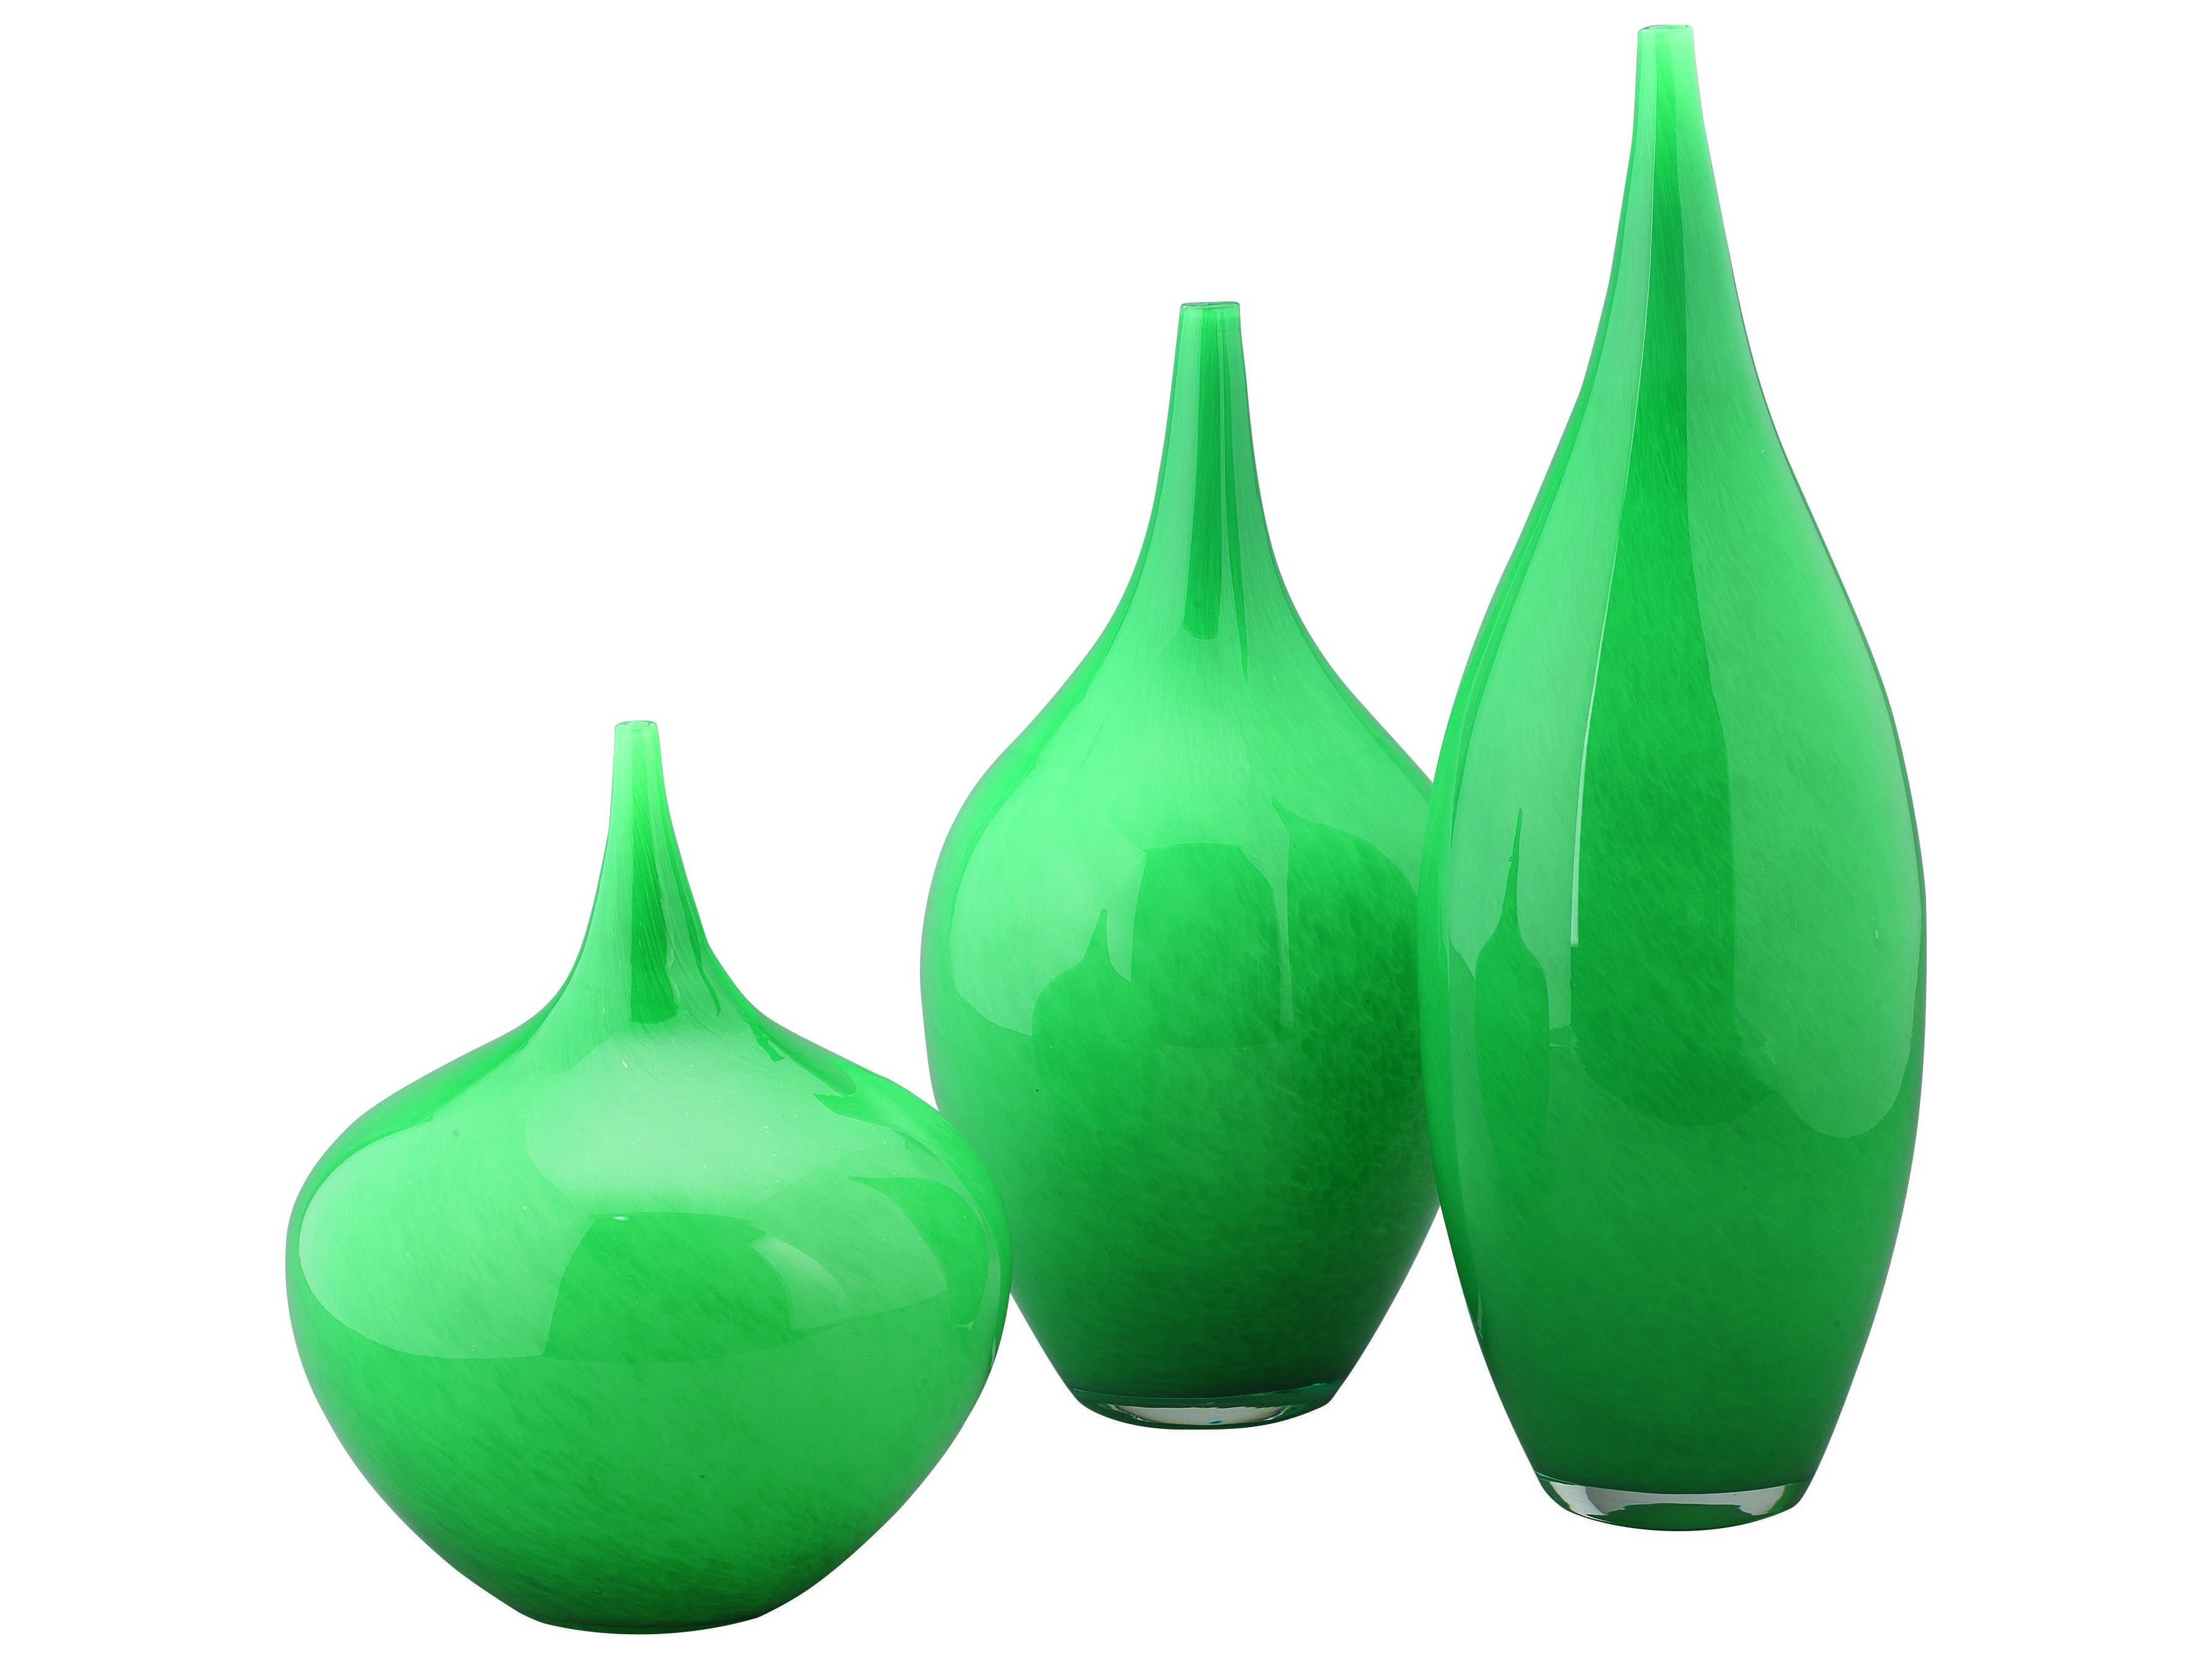 green glass decorative items